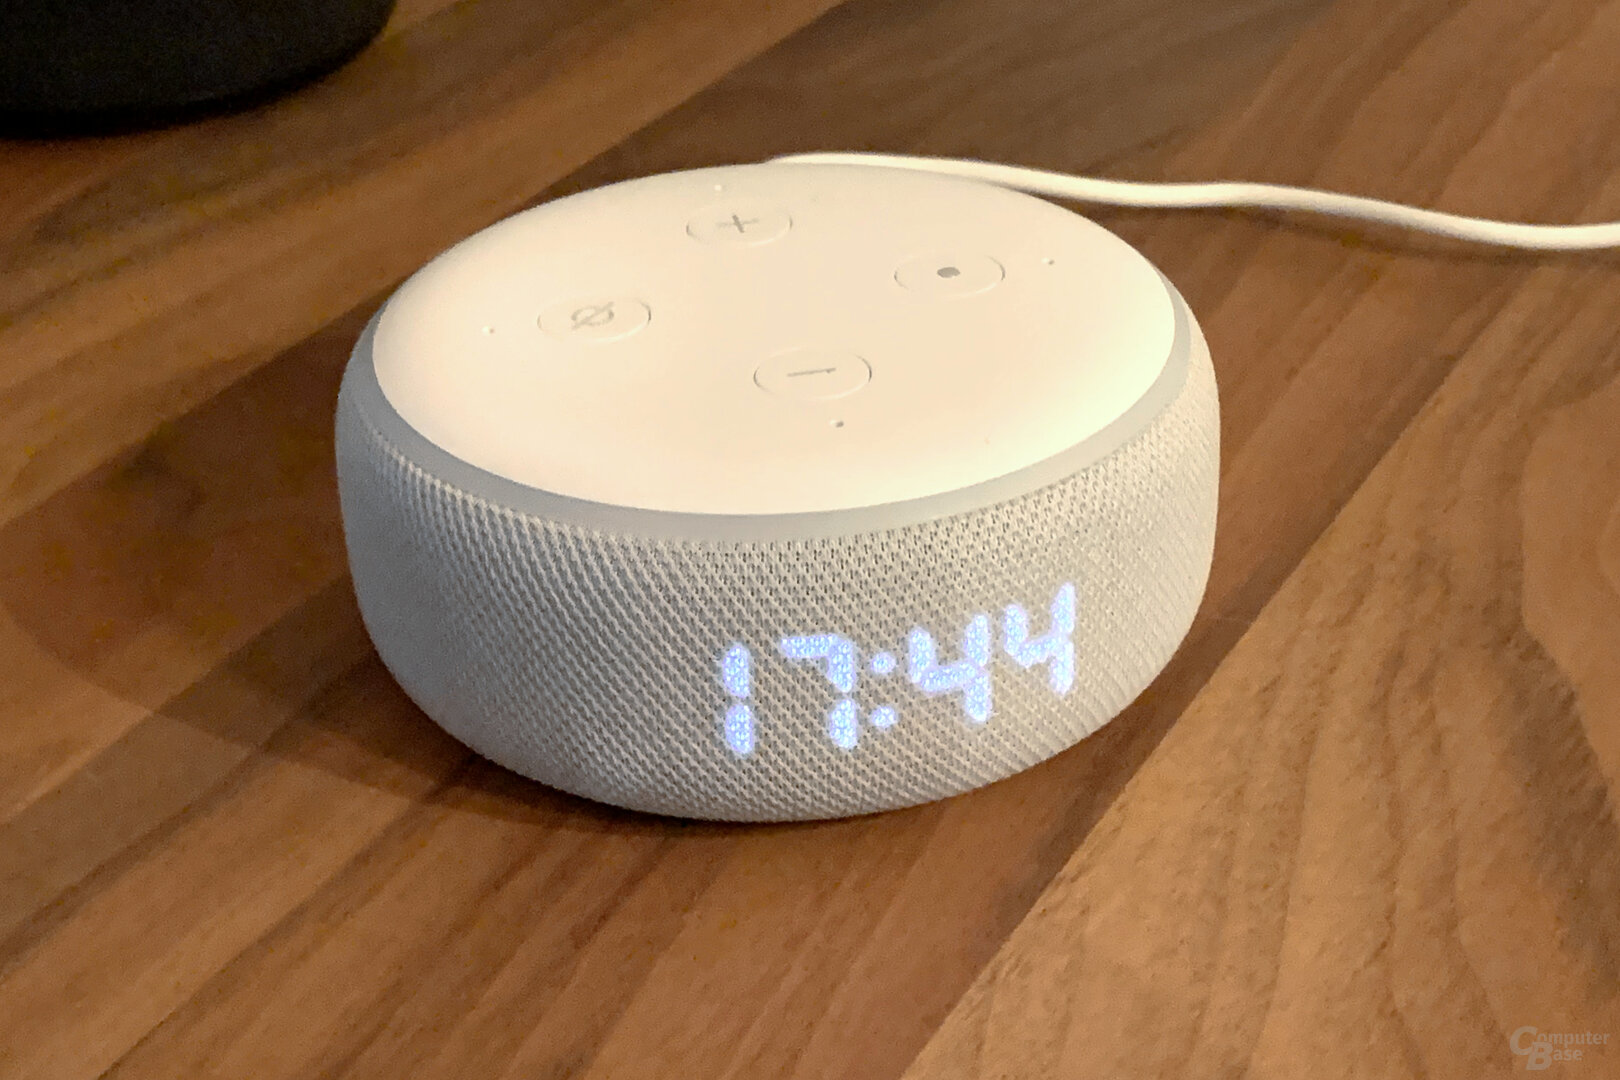 LED-Display des Amazon Echo Dot mit Uhr